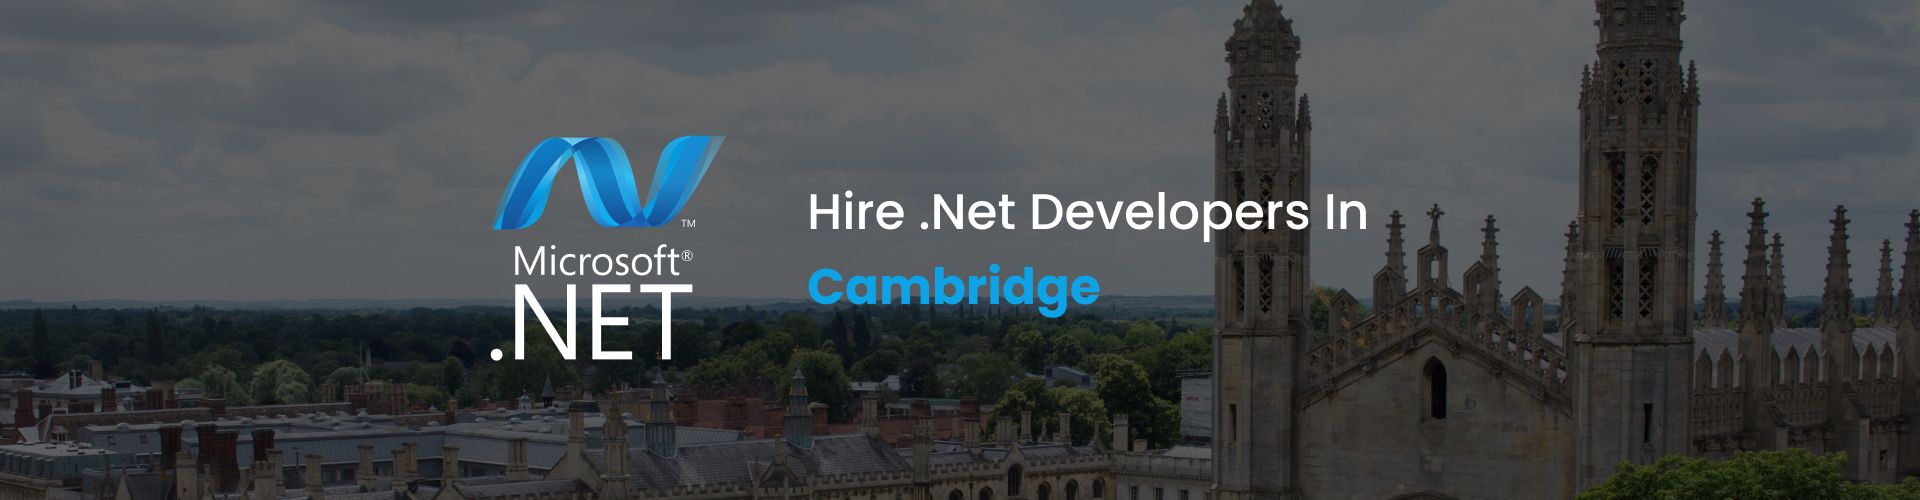 hire dot net developers in cambridge